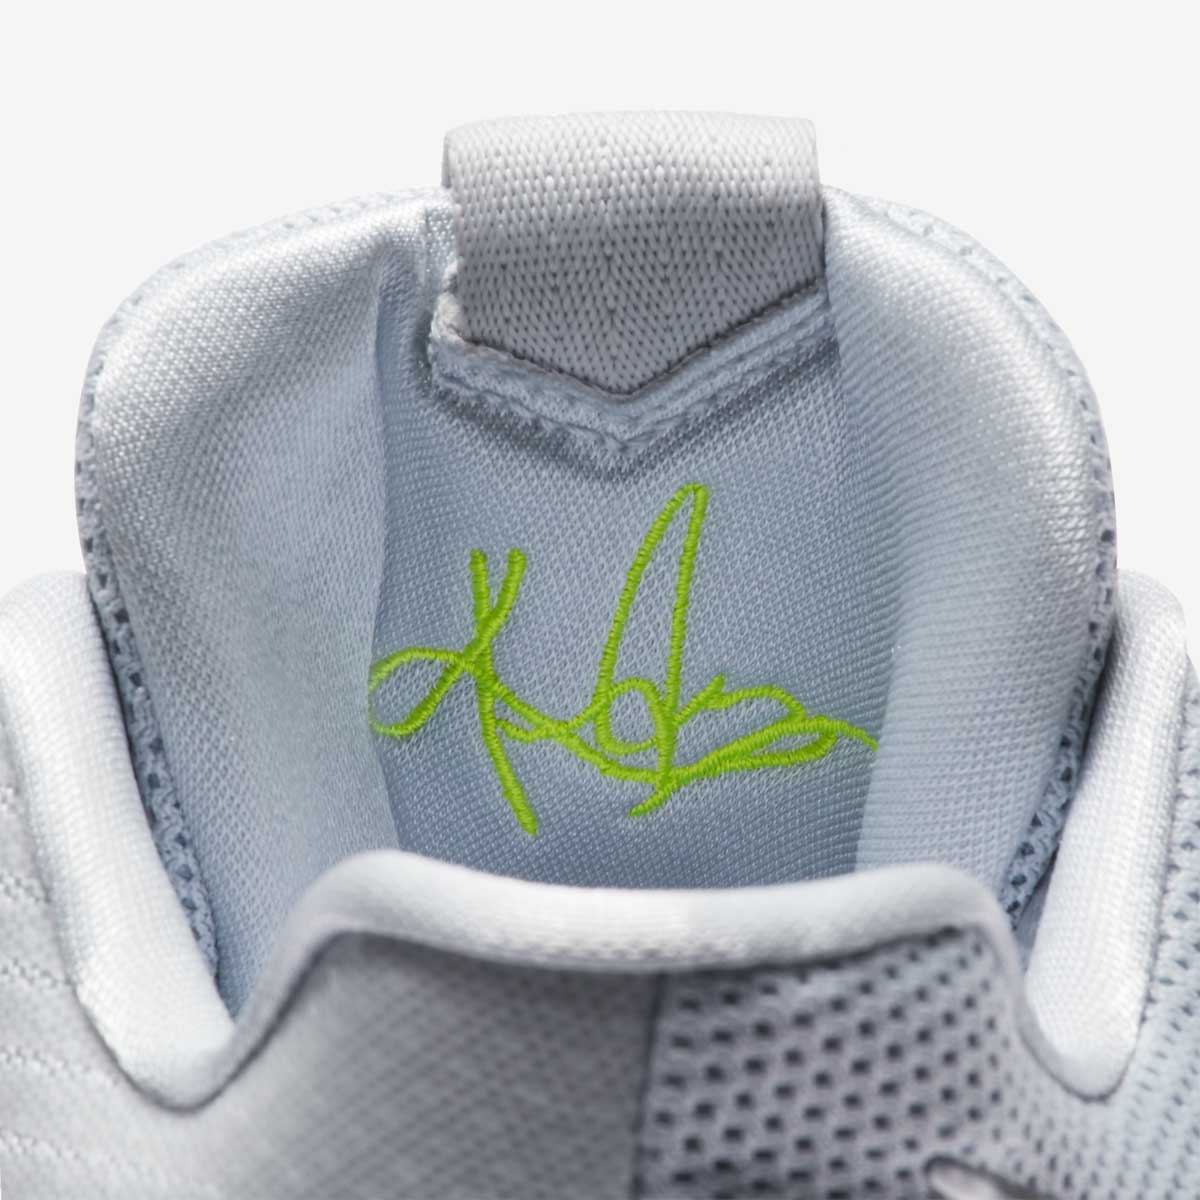 Кроссовки для баскетбола Nike KYRIE 3 AS